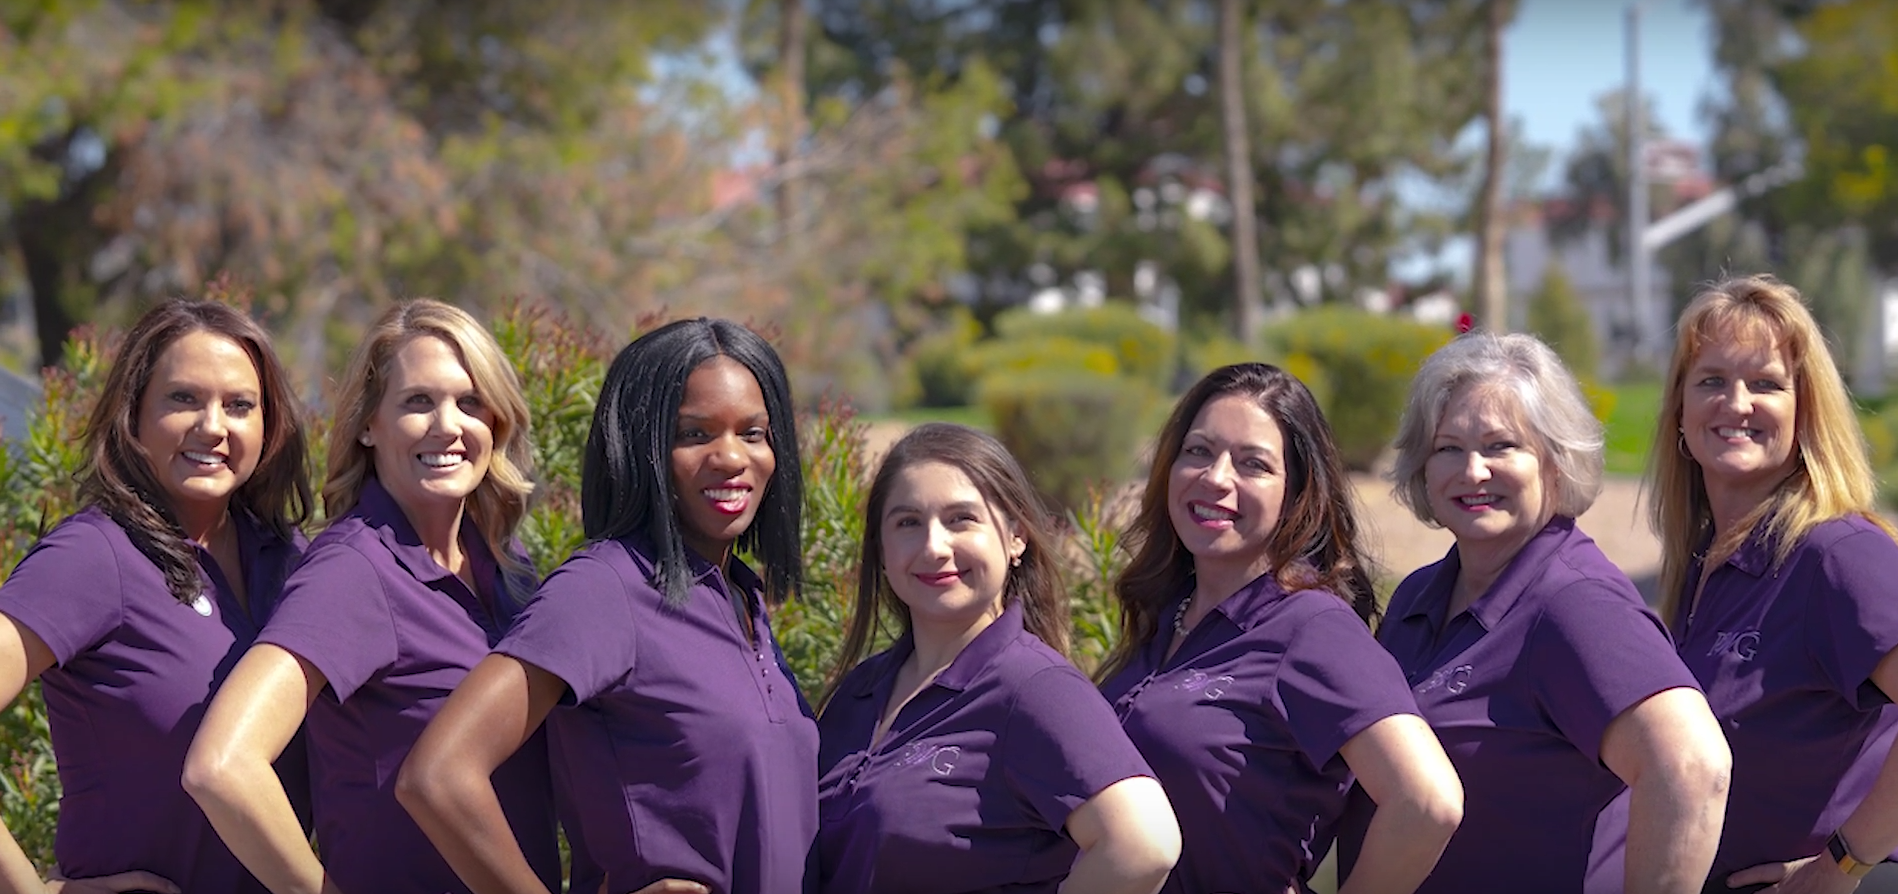 Women employees in purple shirts pose in celebration of International Women's Day